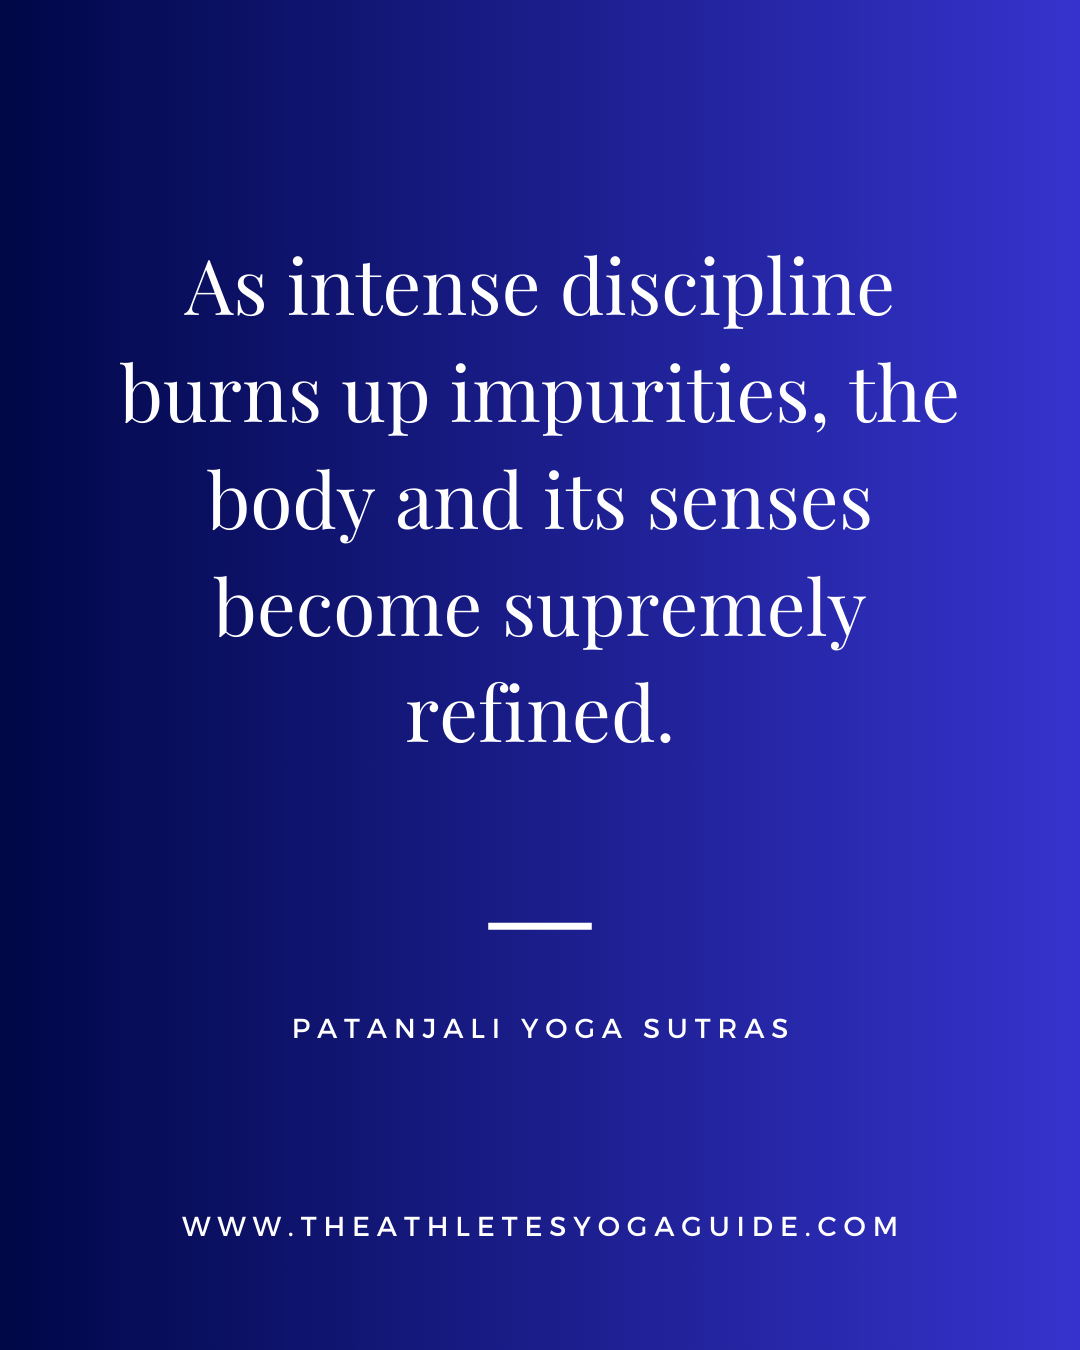 About intense discipline: Patanjali Yoga Sutras